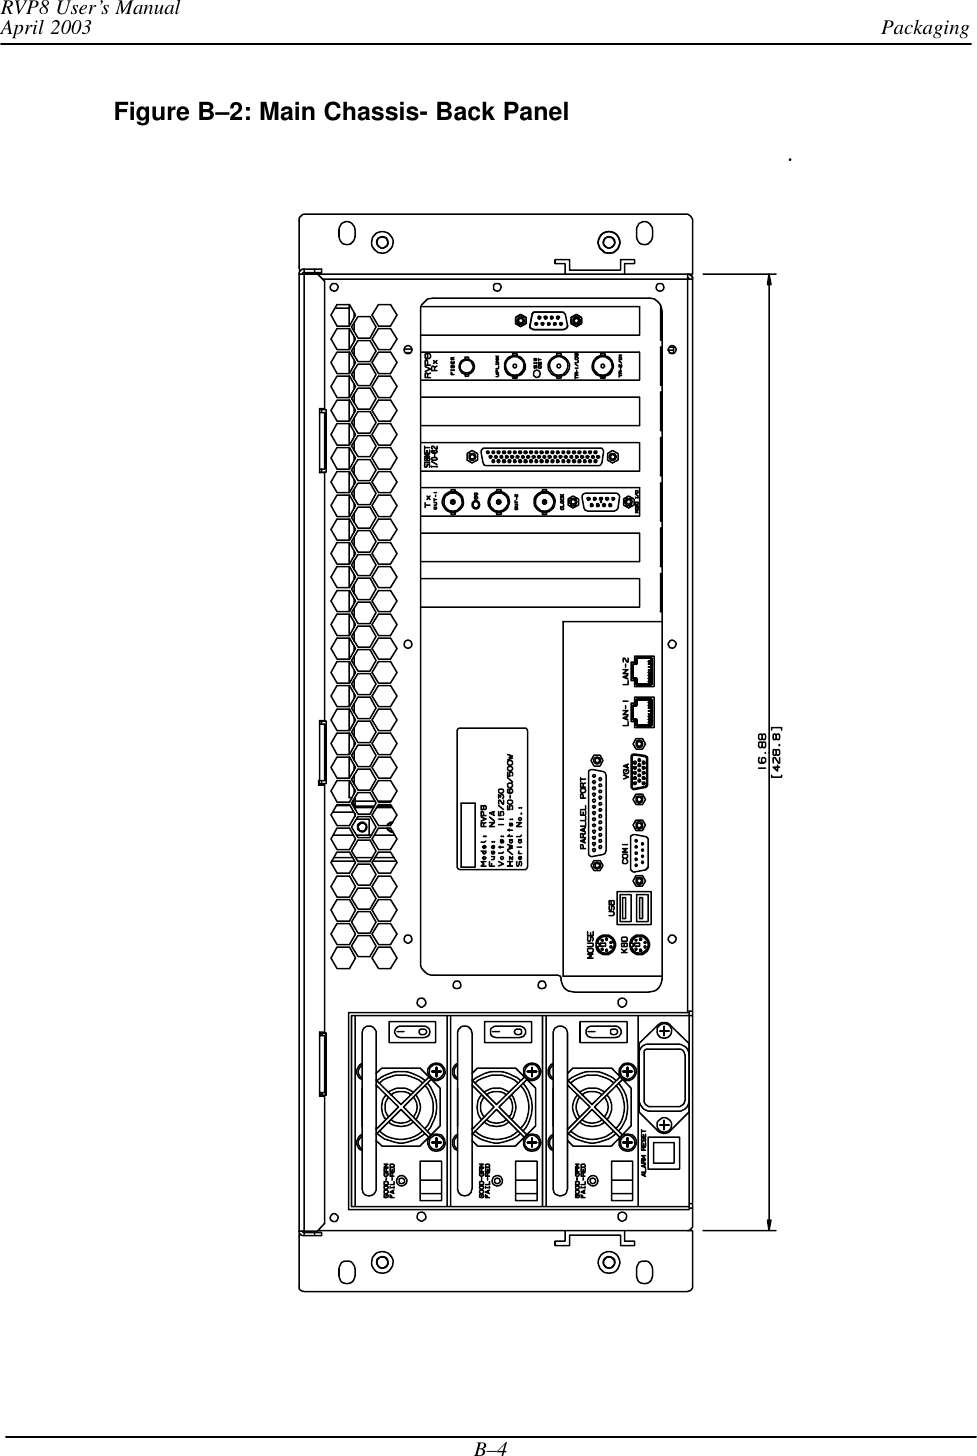 PackagingRVP8 User’s ManualApril 2003B–4Figure B–2: Main Chassis- Back Panel